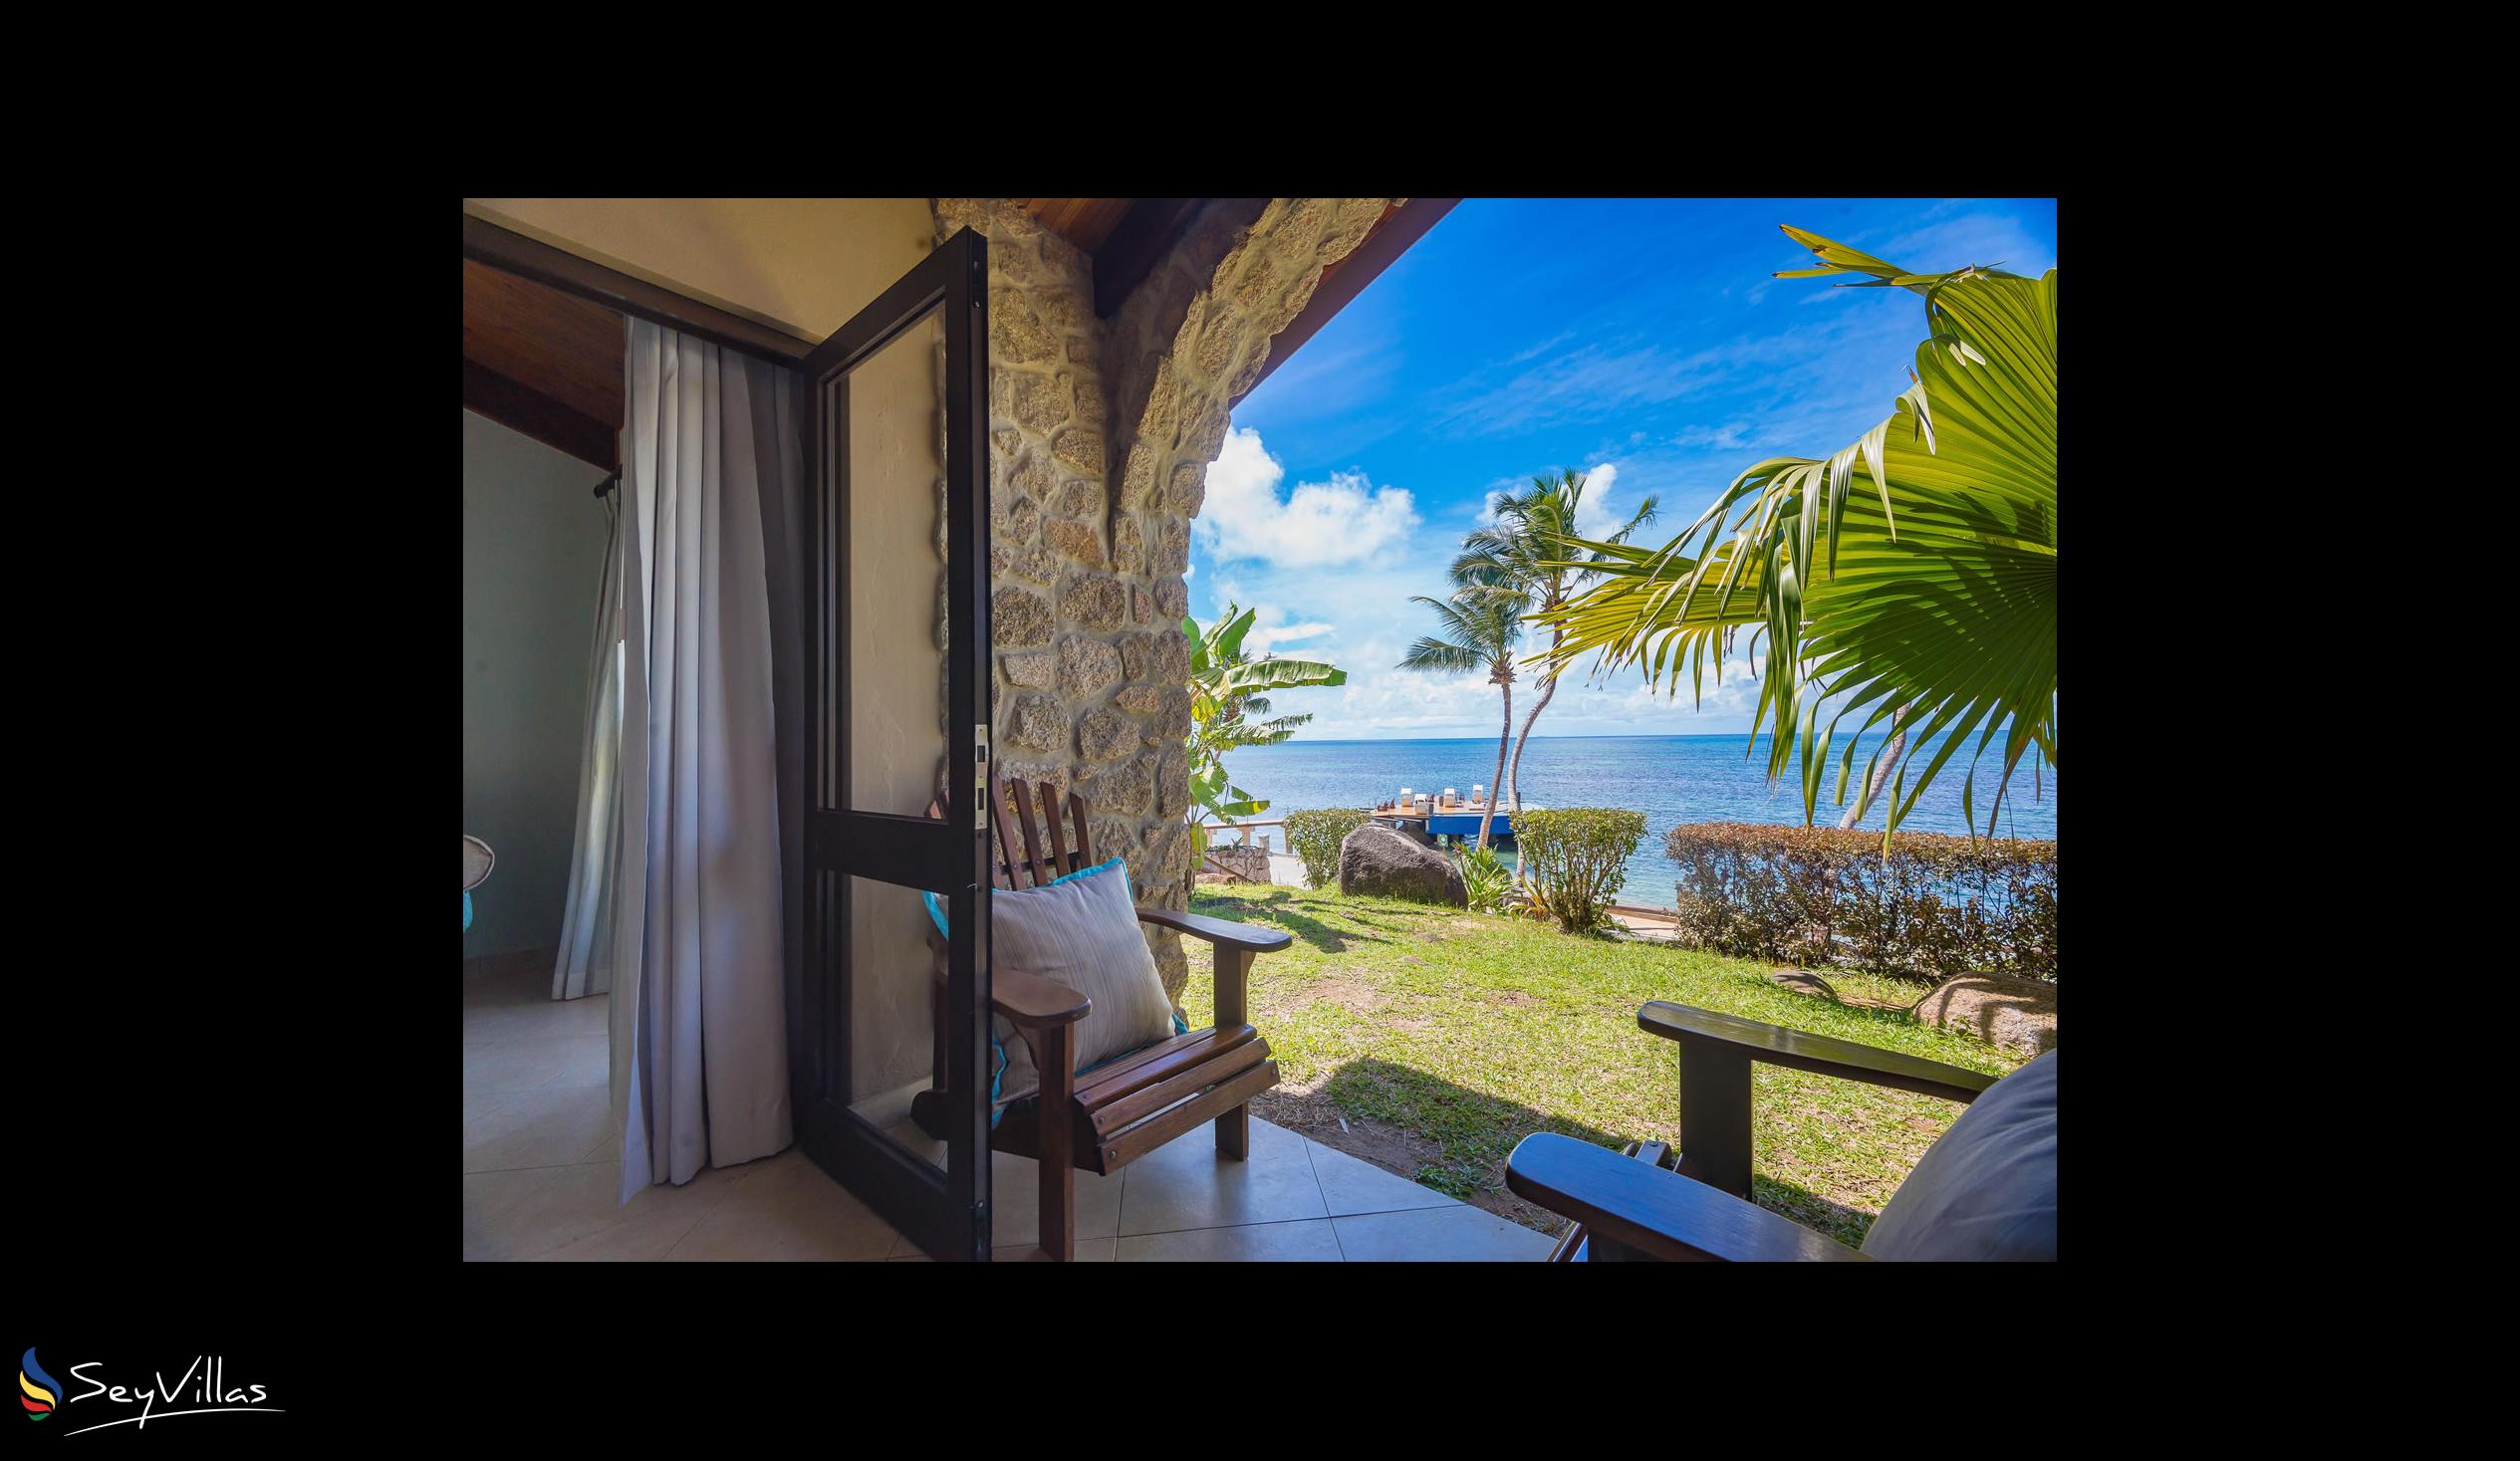 Foto 54: Coco de Mer & Black Parrot Suites - Standard - Praslin (Seychelles)